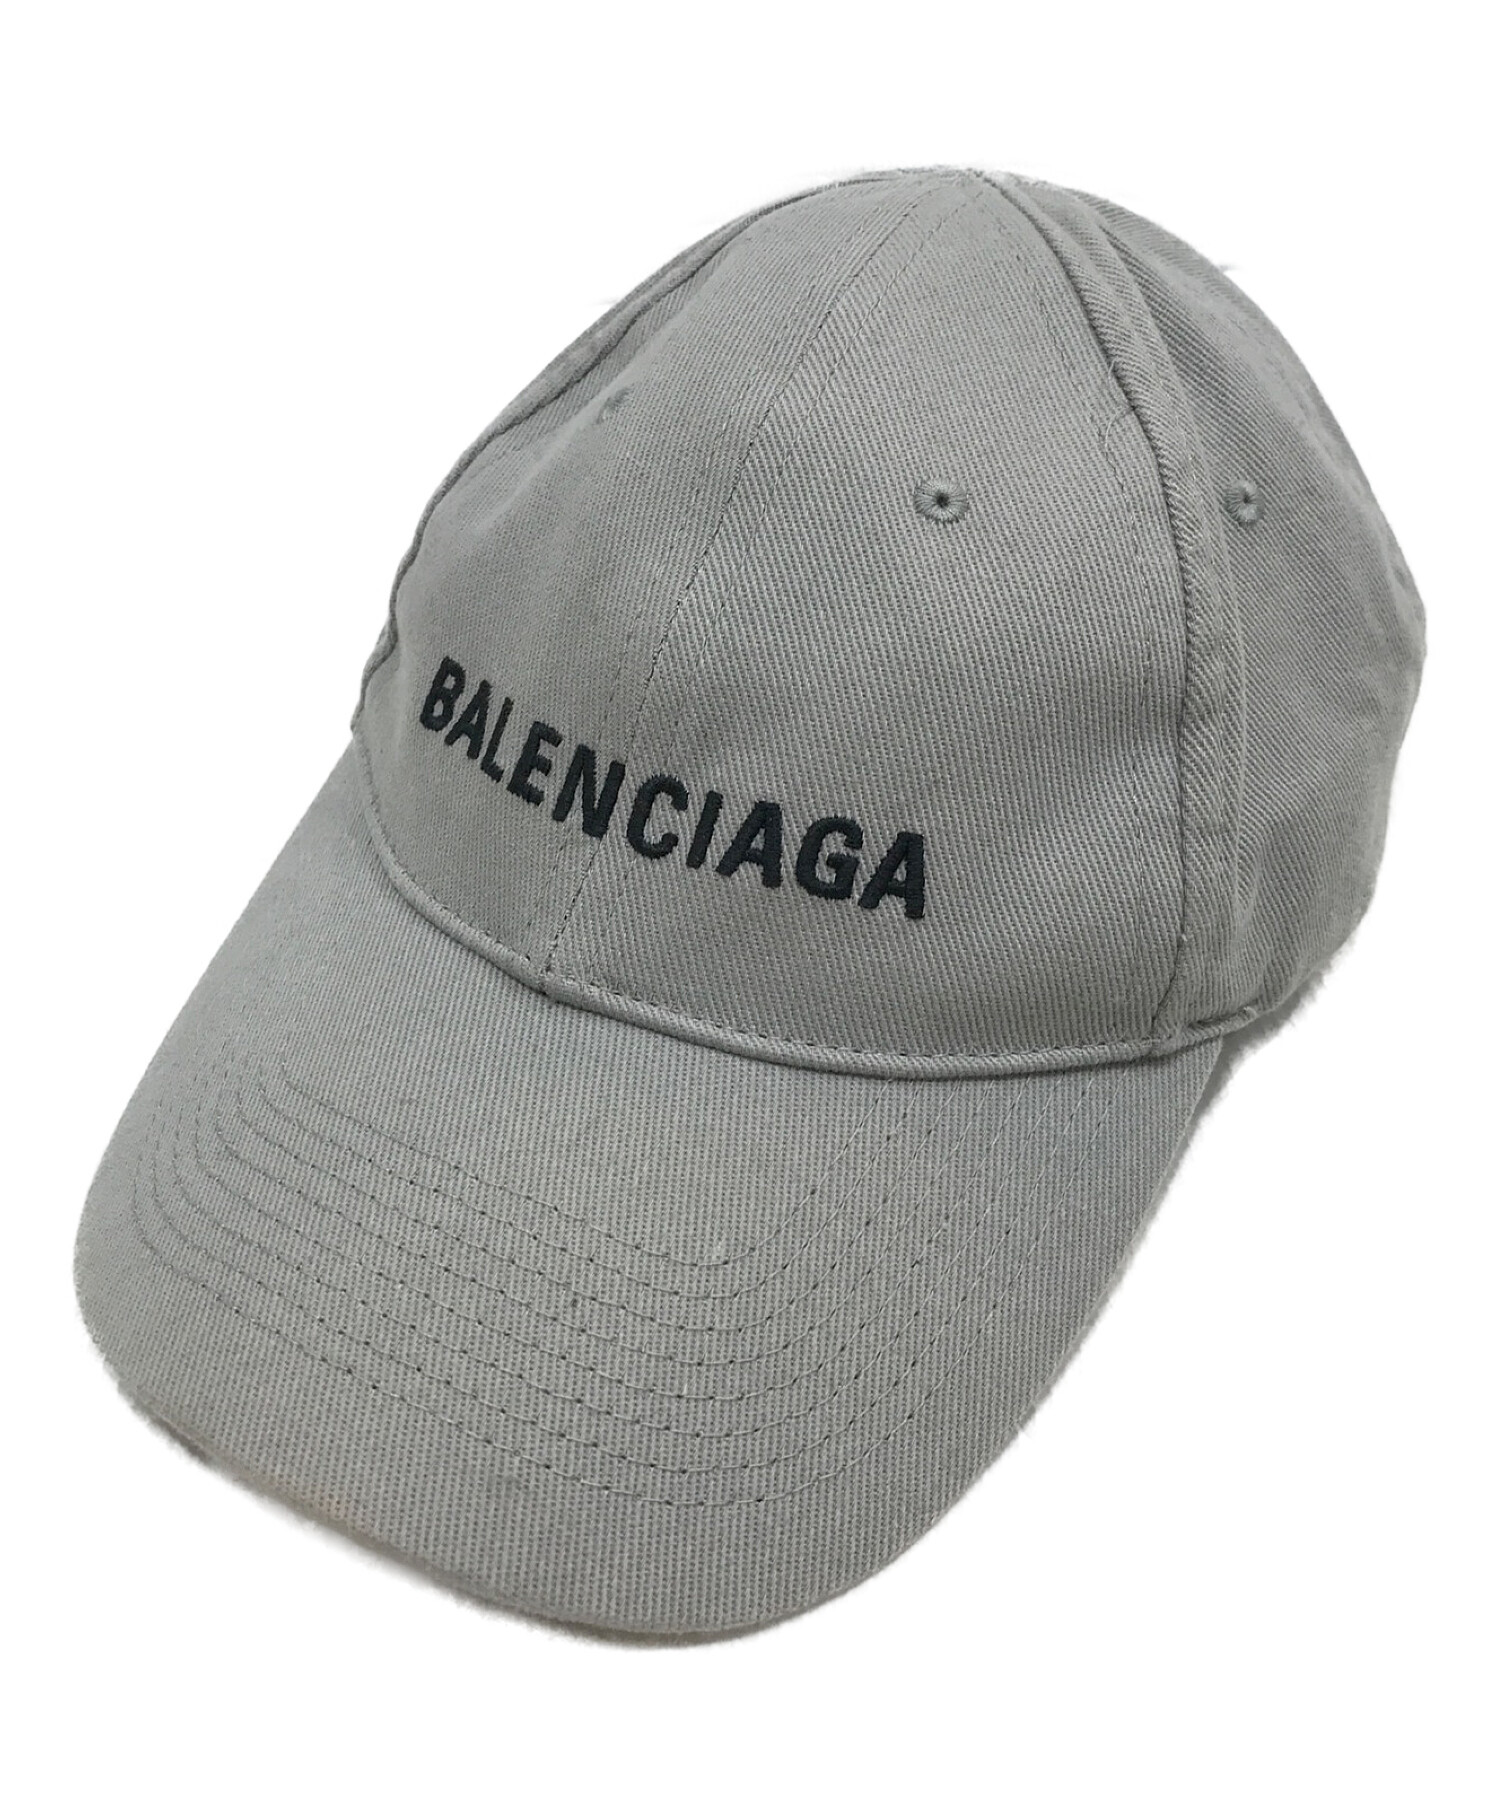 BALENCIAGA (バレンシアガ) キャップ グレー サイズ:L (59cm)